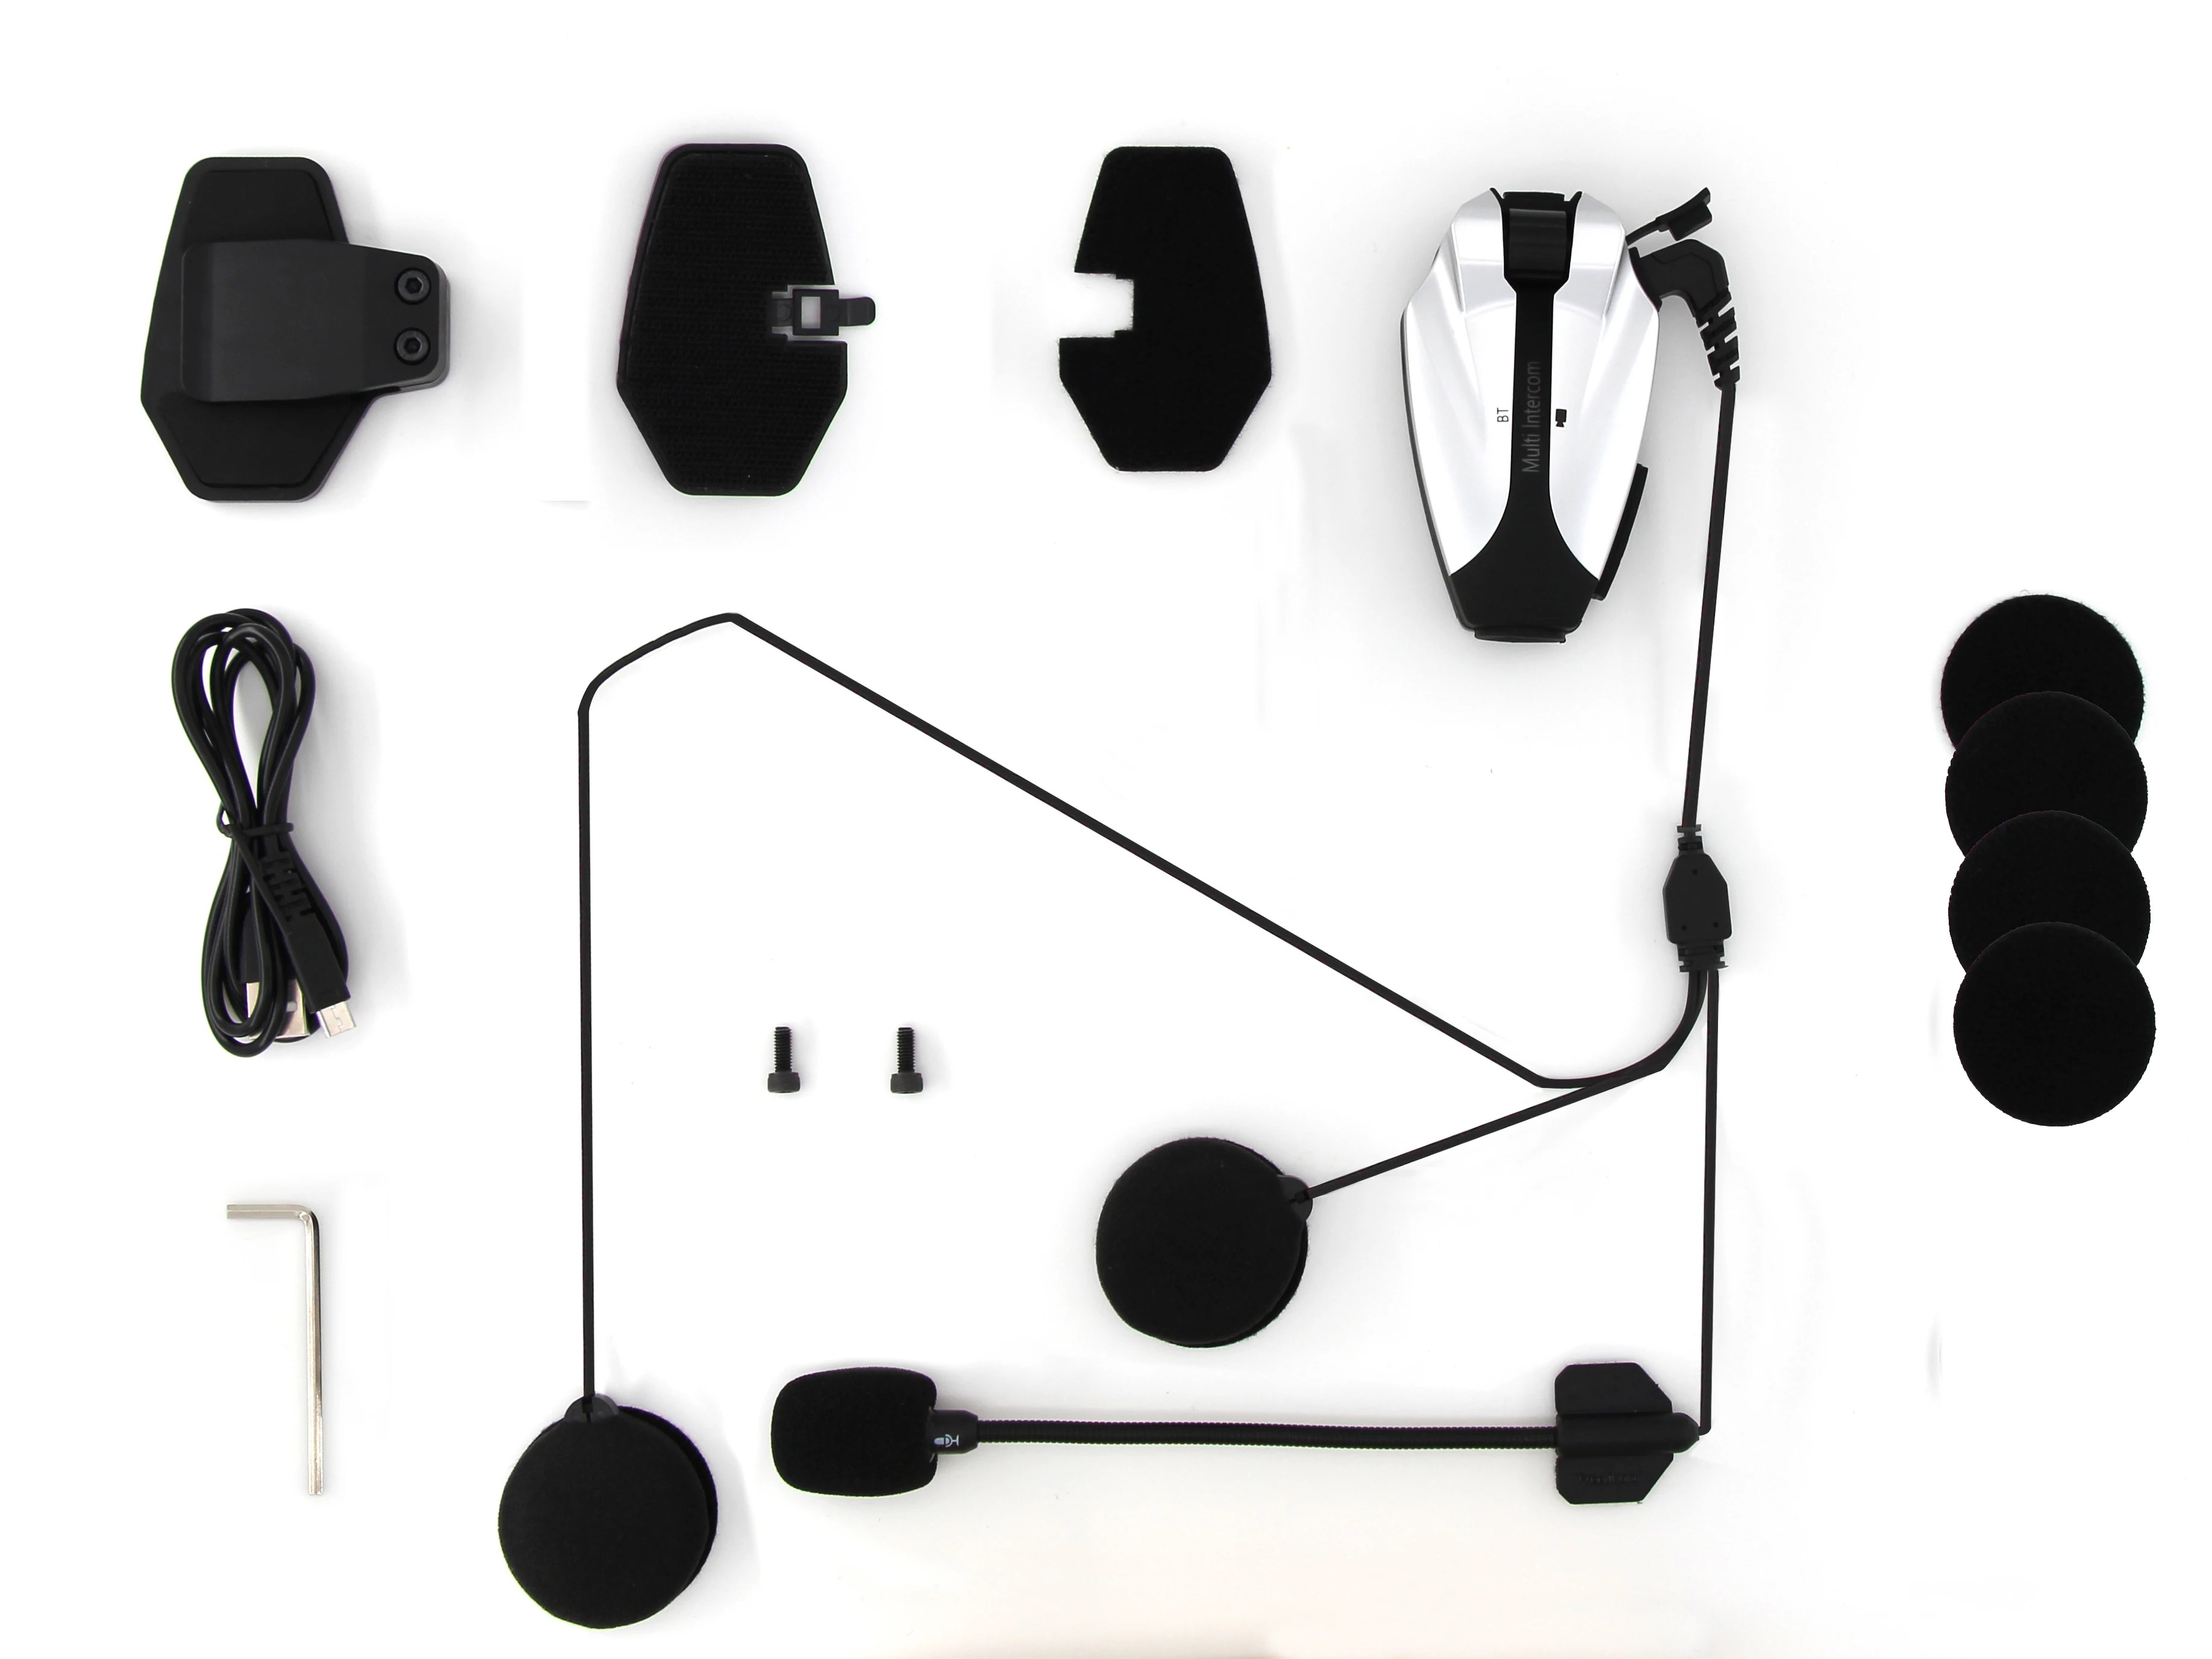 VR робот мотоцикл домофон Bluetooth шлем гарнитура с HD 720P камера рекордер для 4 гонщиков walkie talkie